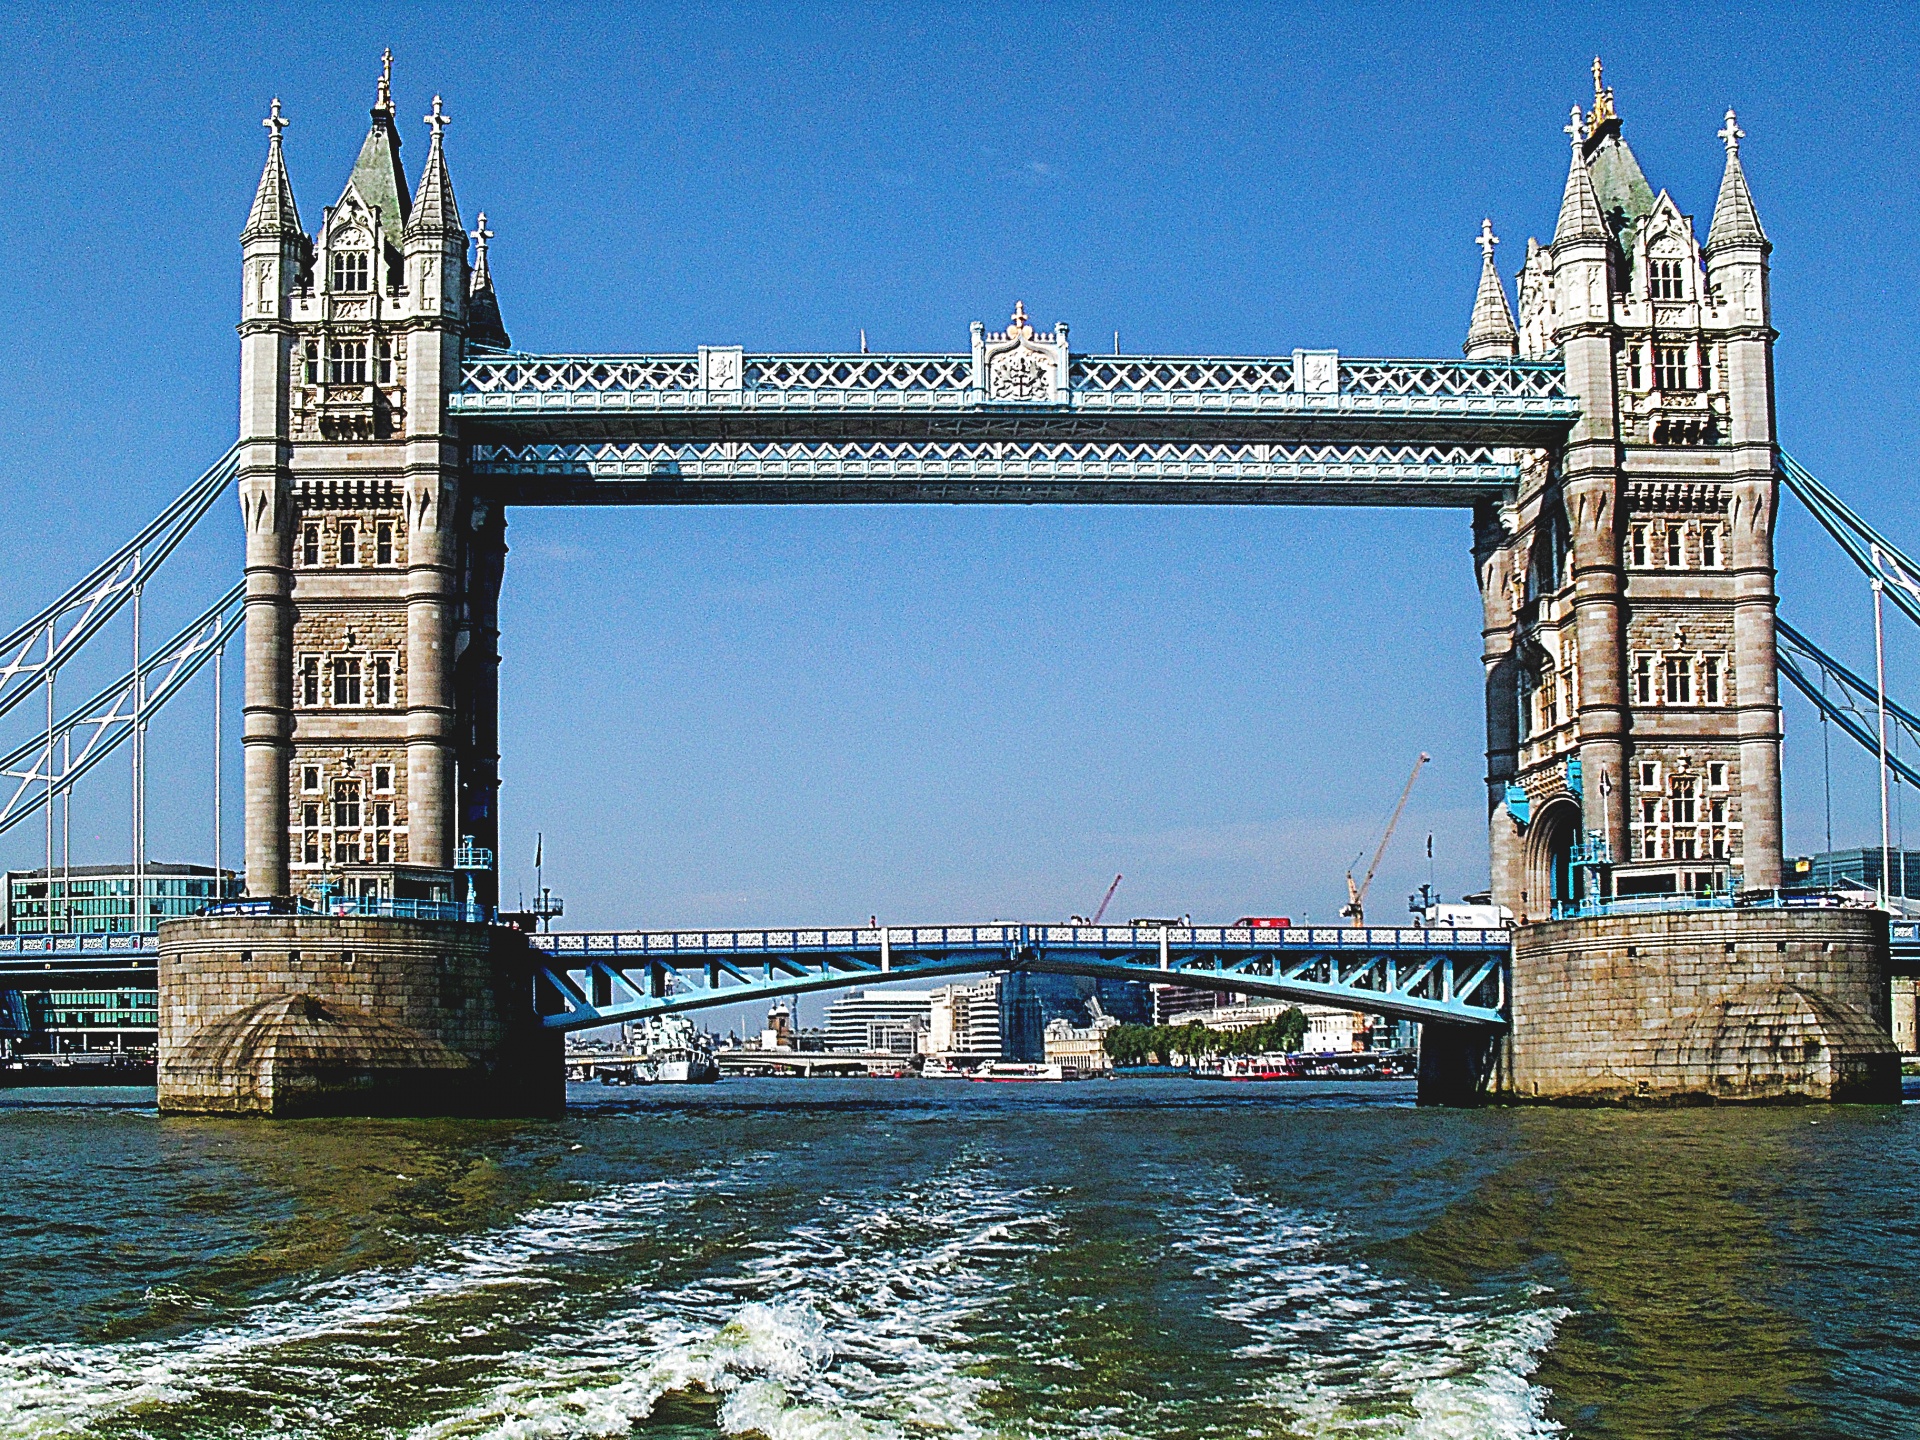 Old Photos Of Tower Bridge London